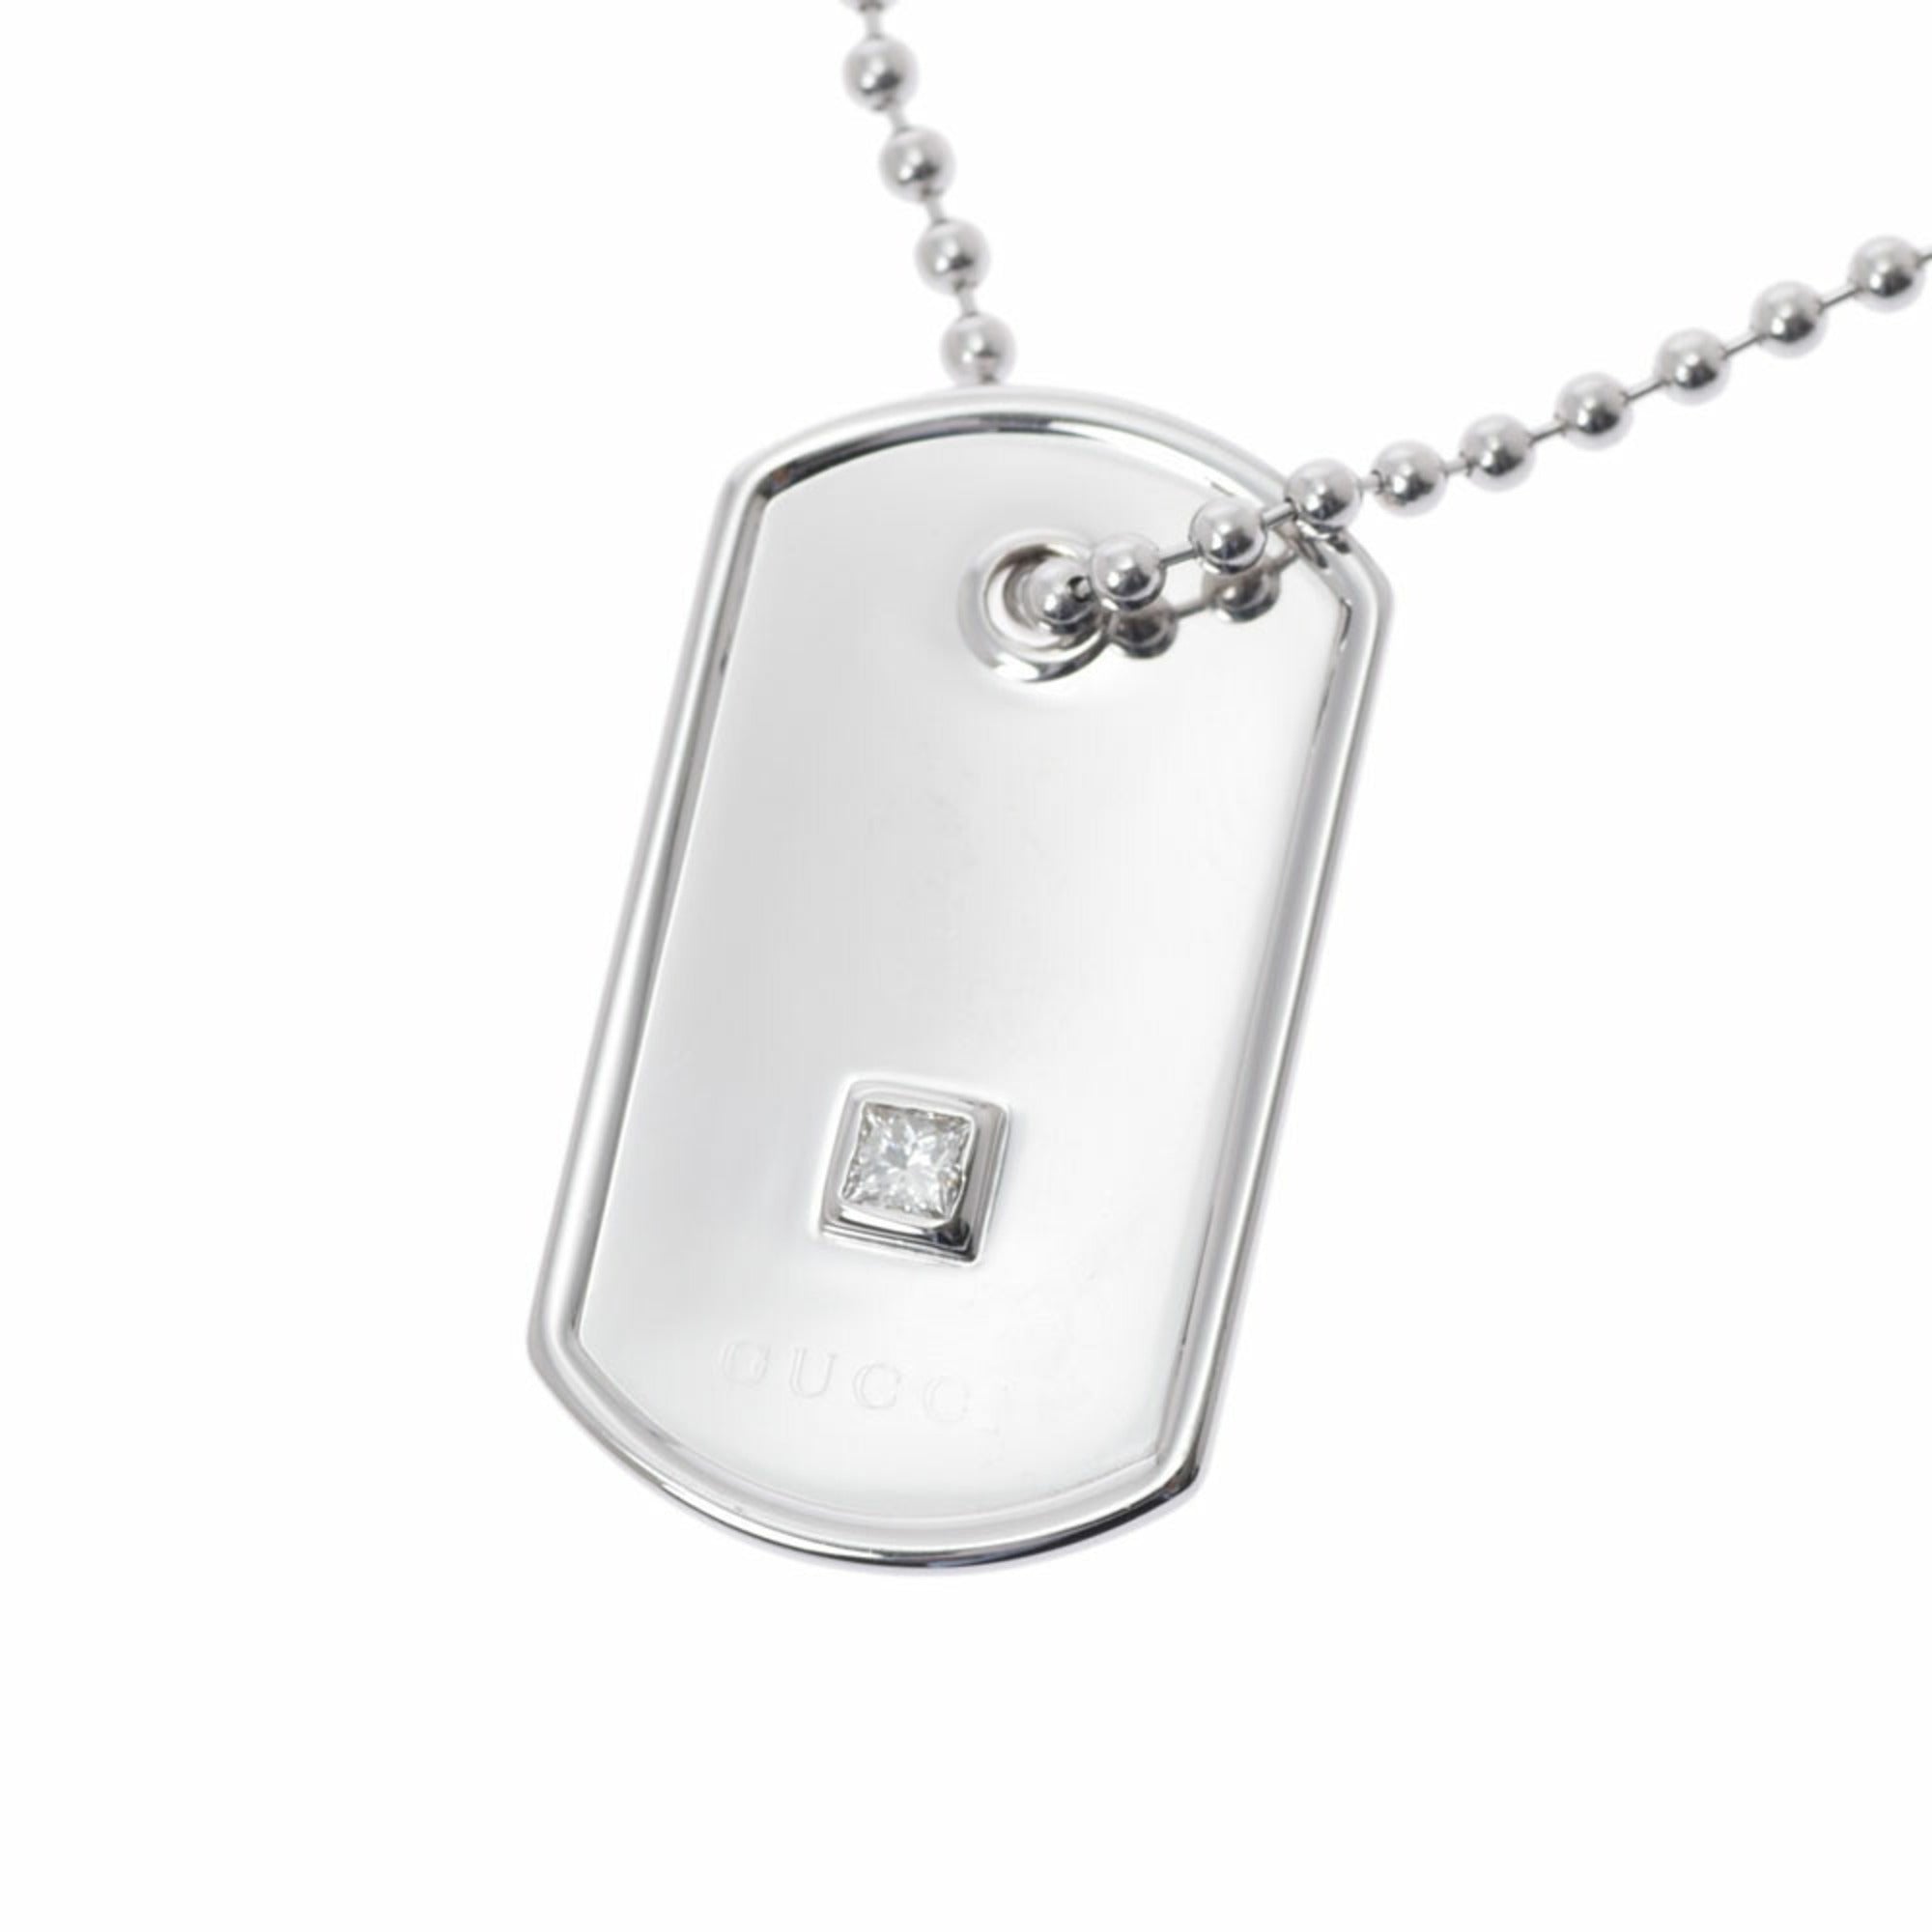 Gucci Dog Tag Necklace Charm Ball Silver 925 w/ Protective bag storage box  | eBay